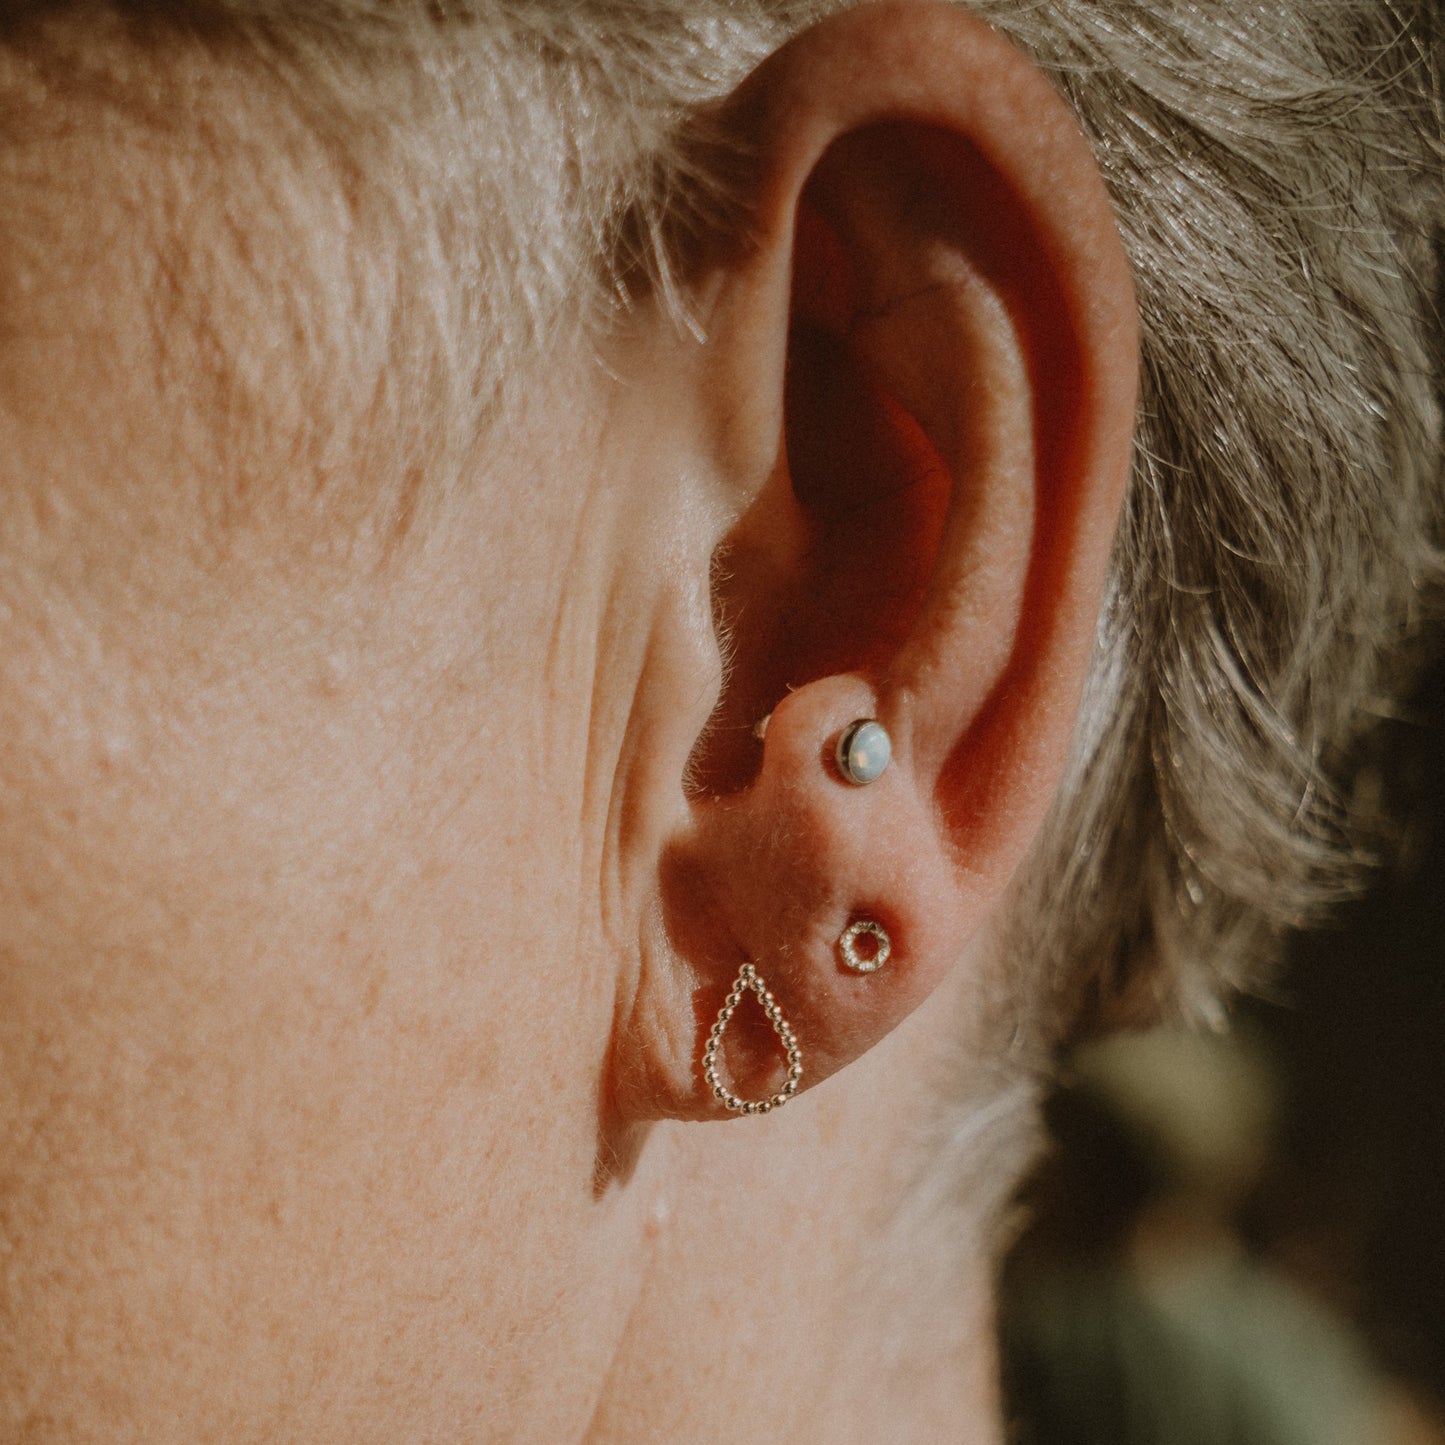 Woman wearing a Micro Textured Circle Studs Earring and a Teardrop Earring - Trisha Flanagan